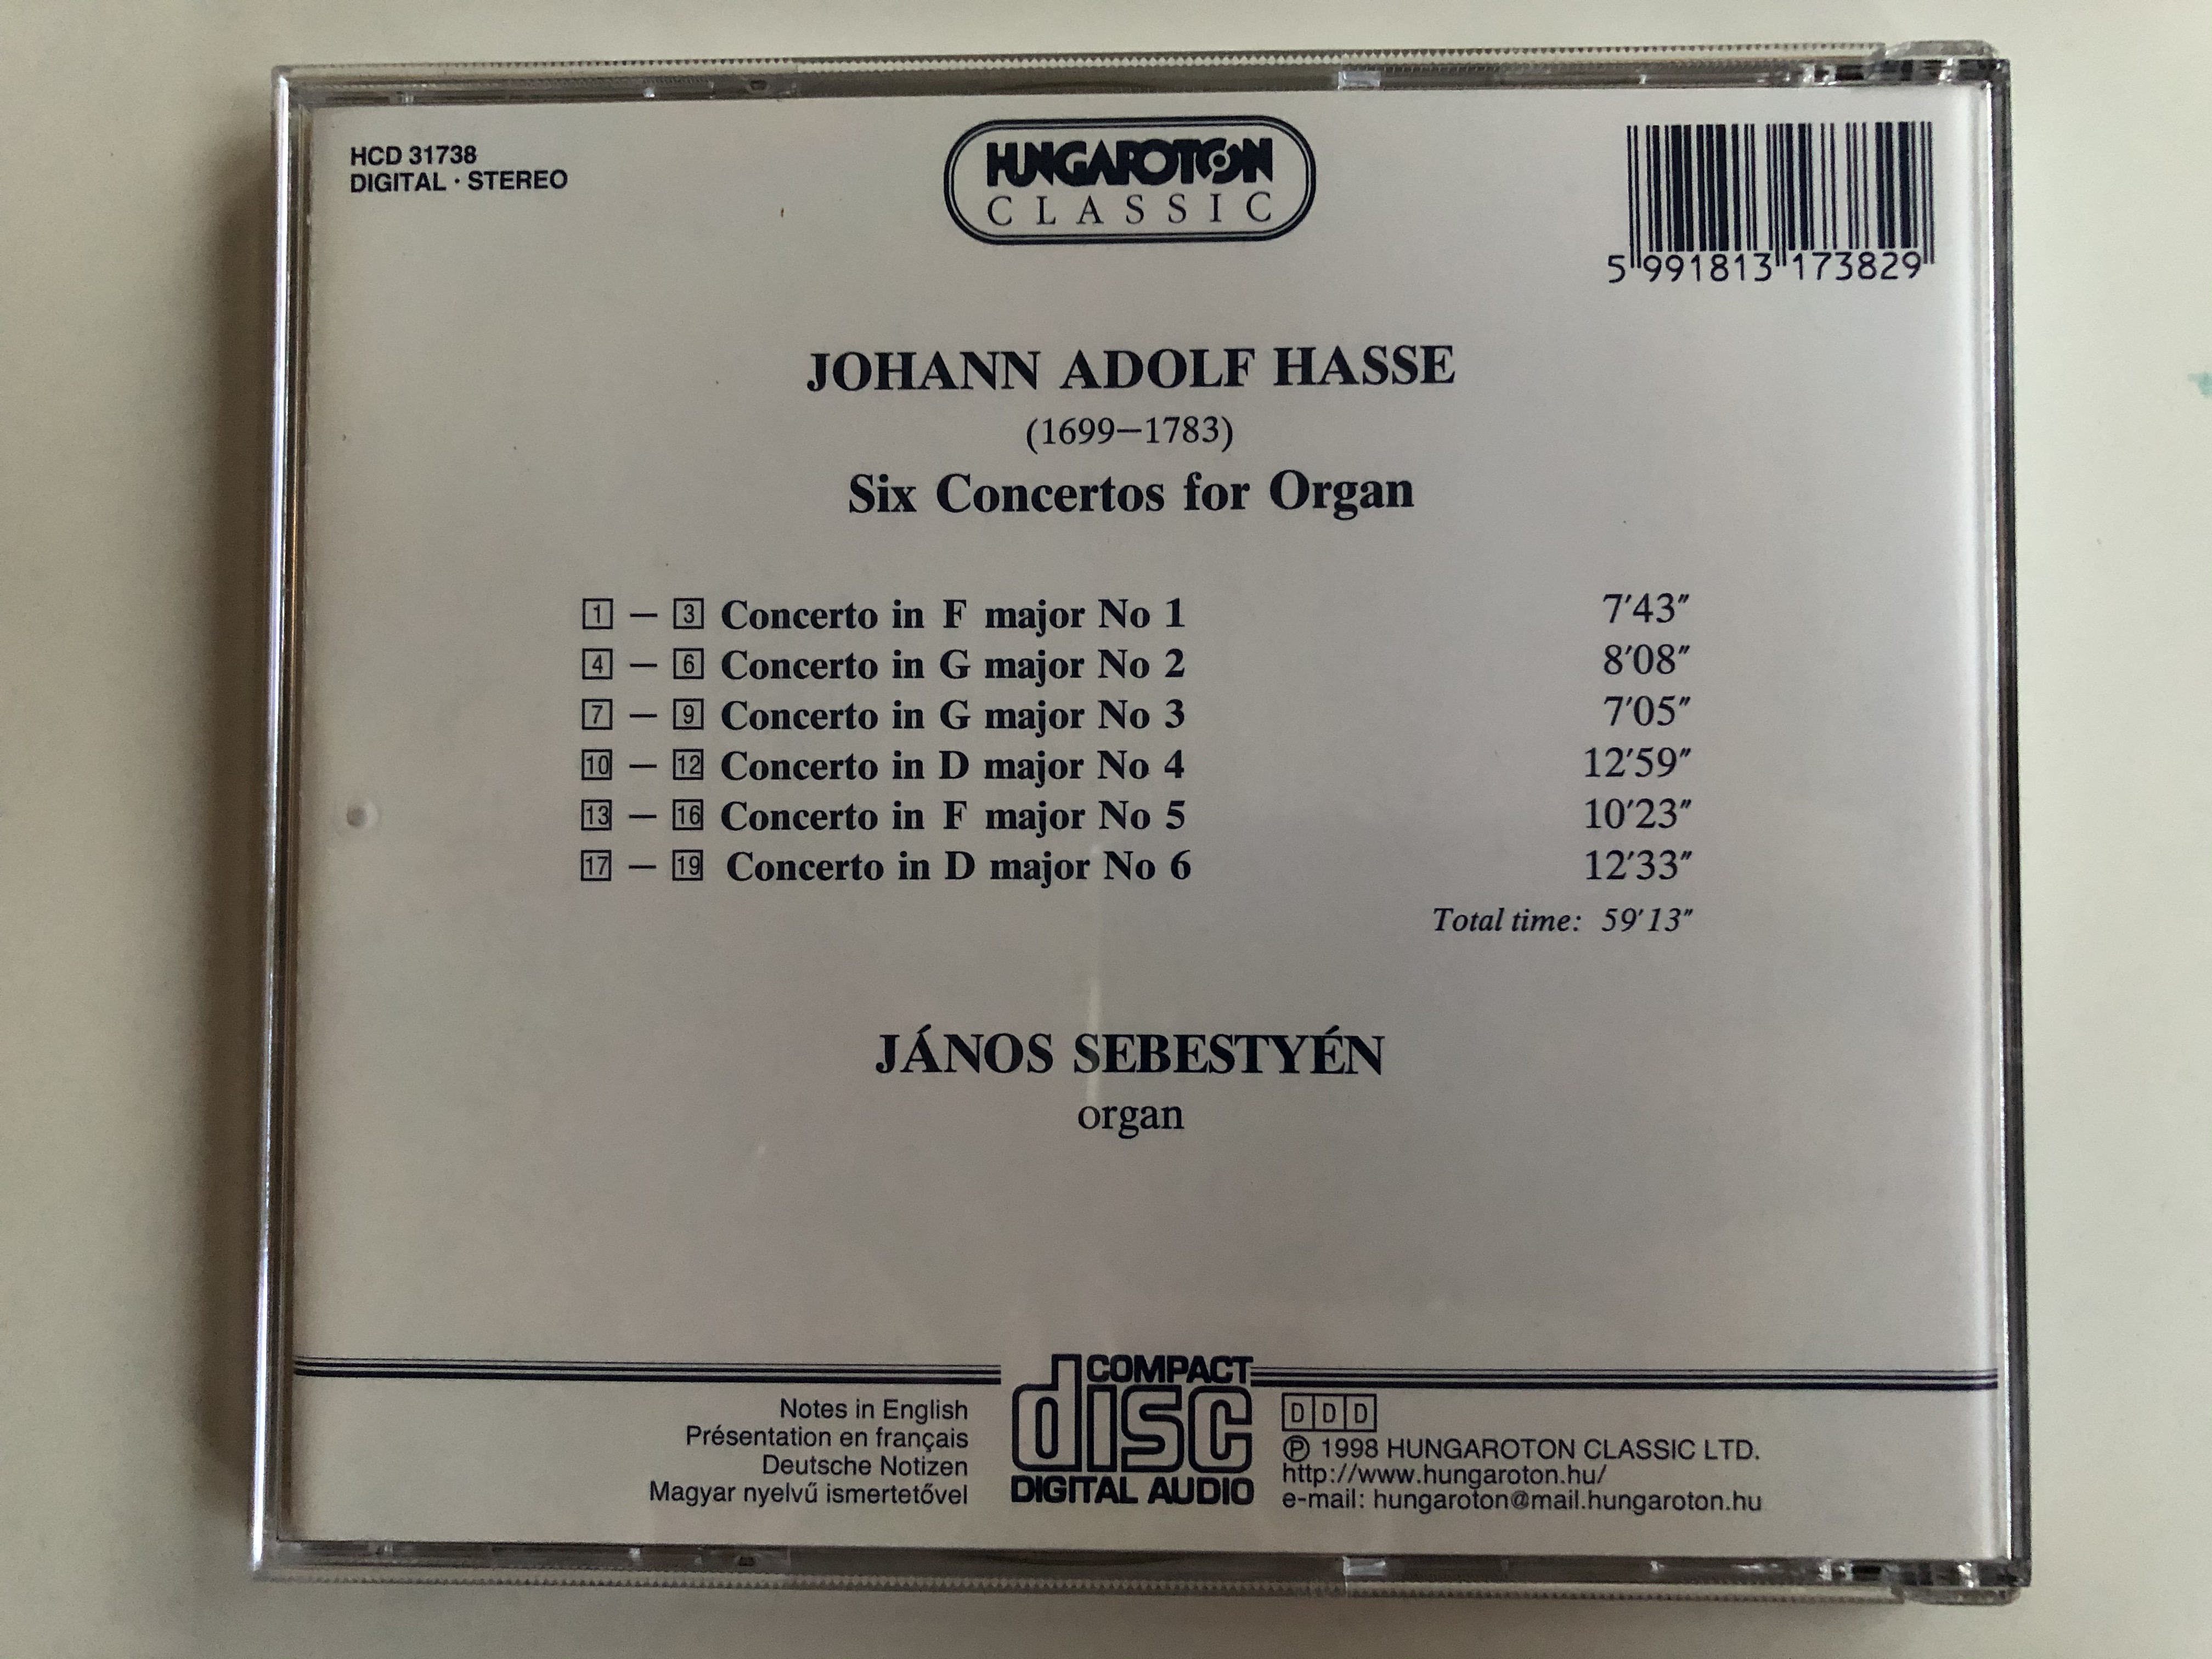 johann-adolf-hasse-six-concertos-j-nos-sebesty-n-organ-hungaroton-classic-audio-cd-1998-stereo-hcd-31738-8-.jpg